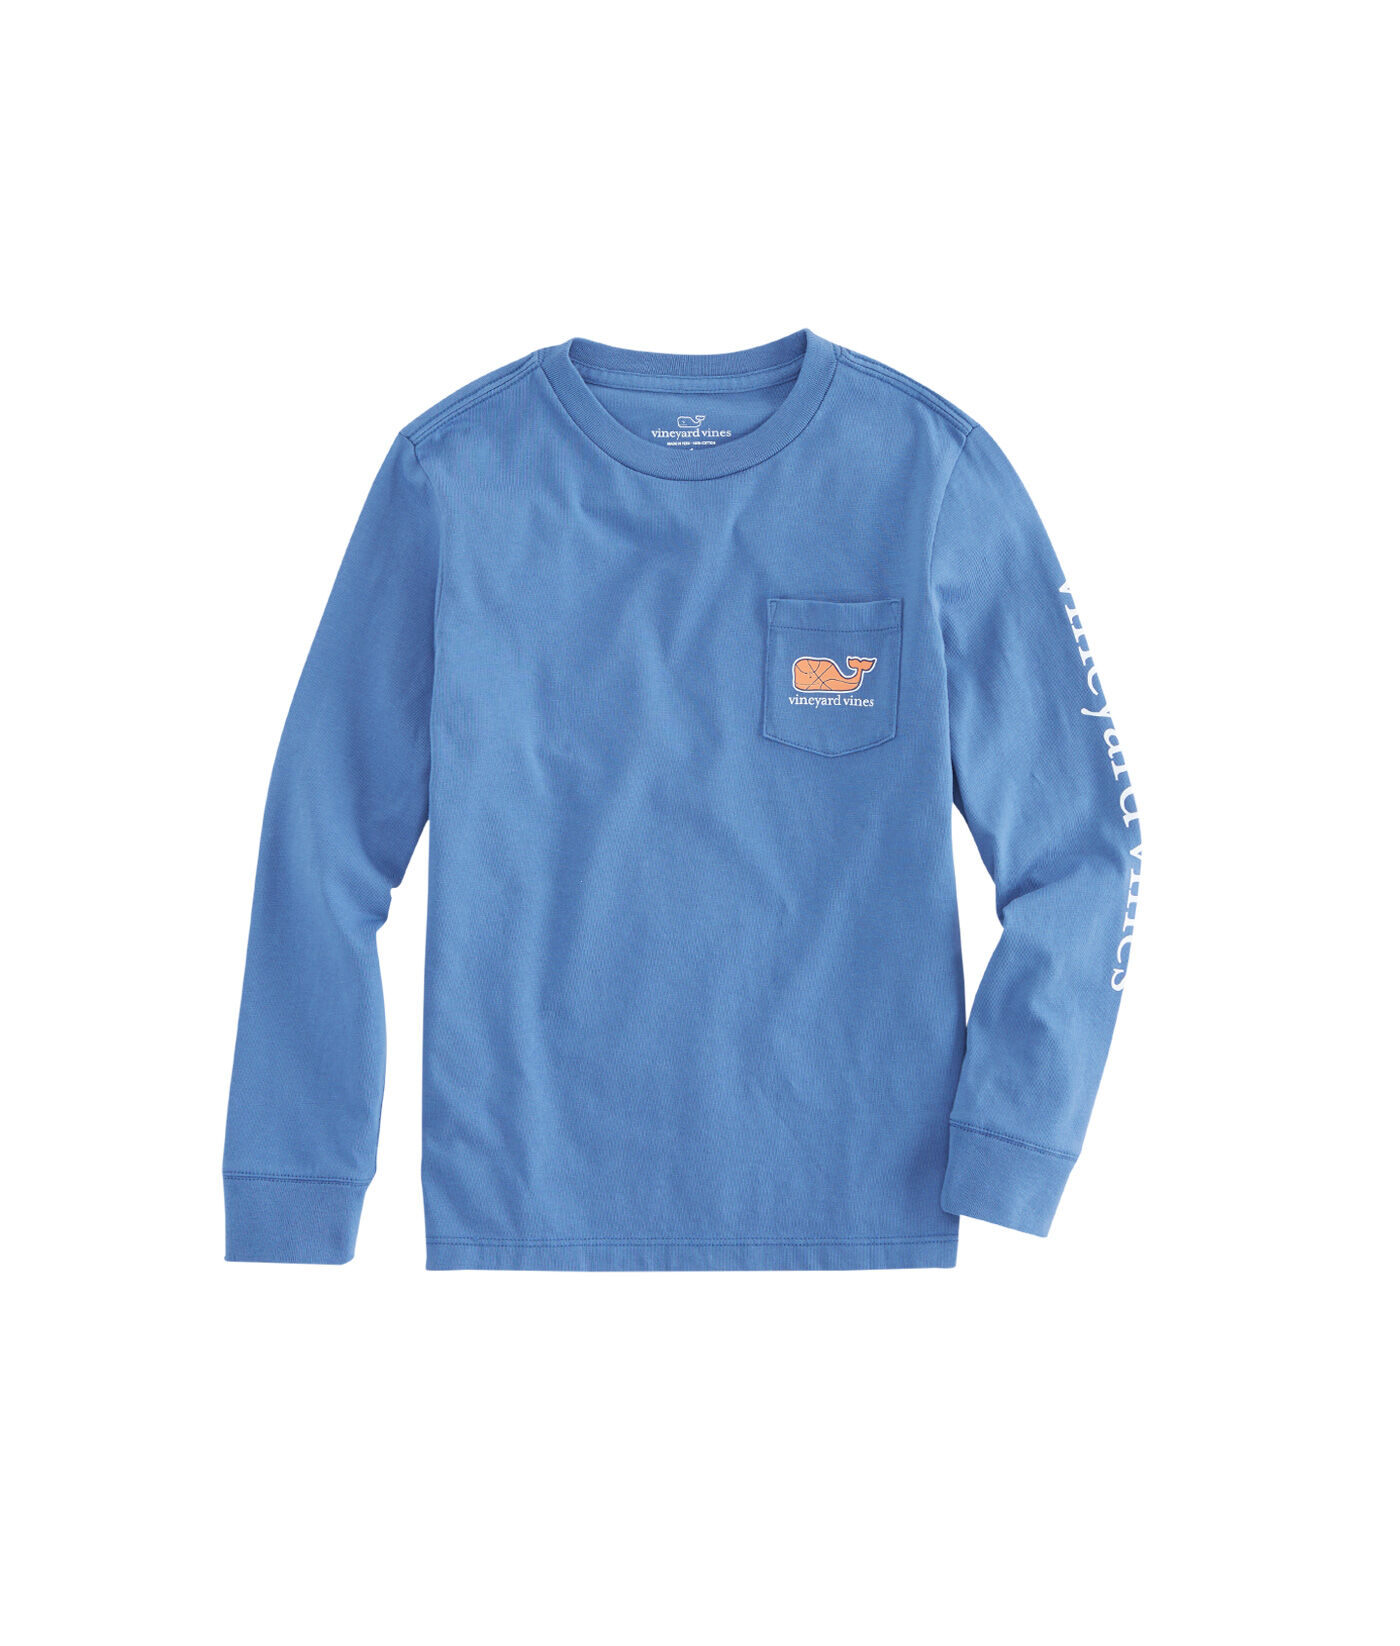 NWT Boy's LS Vineyard Vines Make It Rain Basketball Whale T-Shirt Size XL 